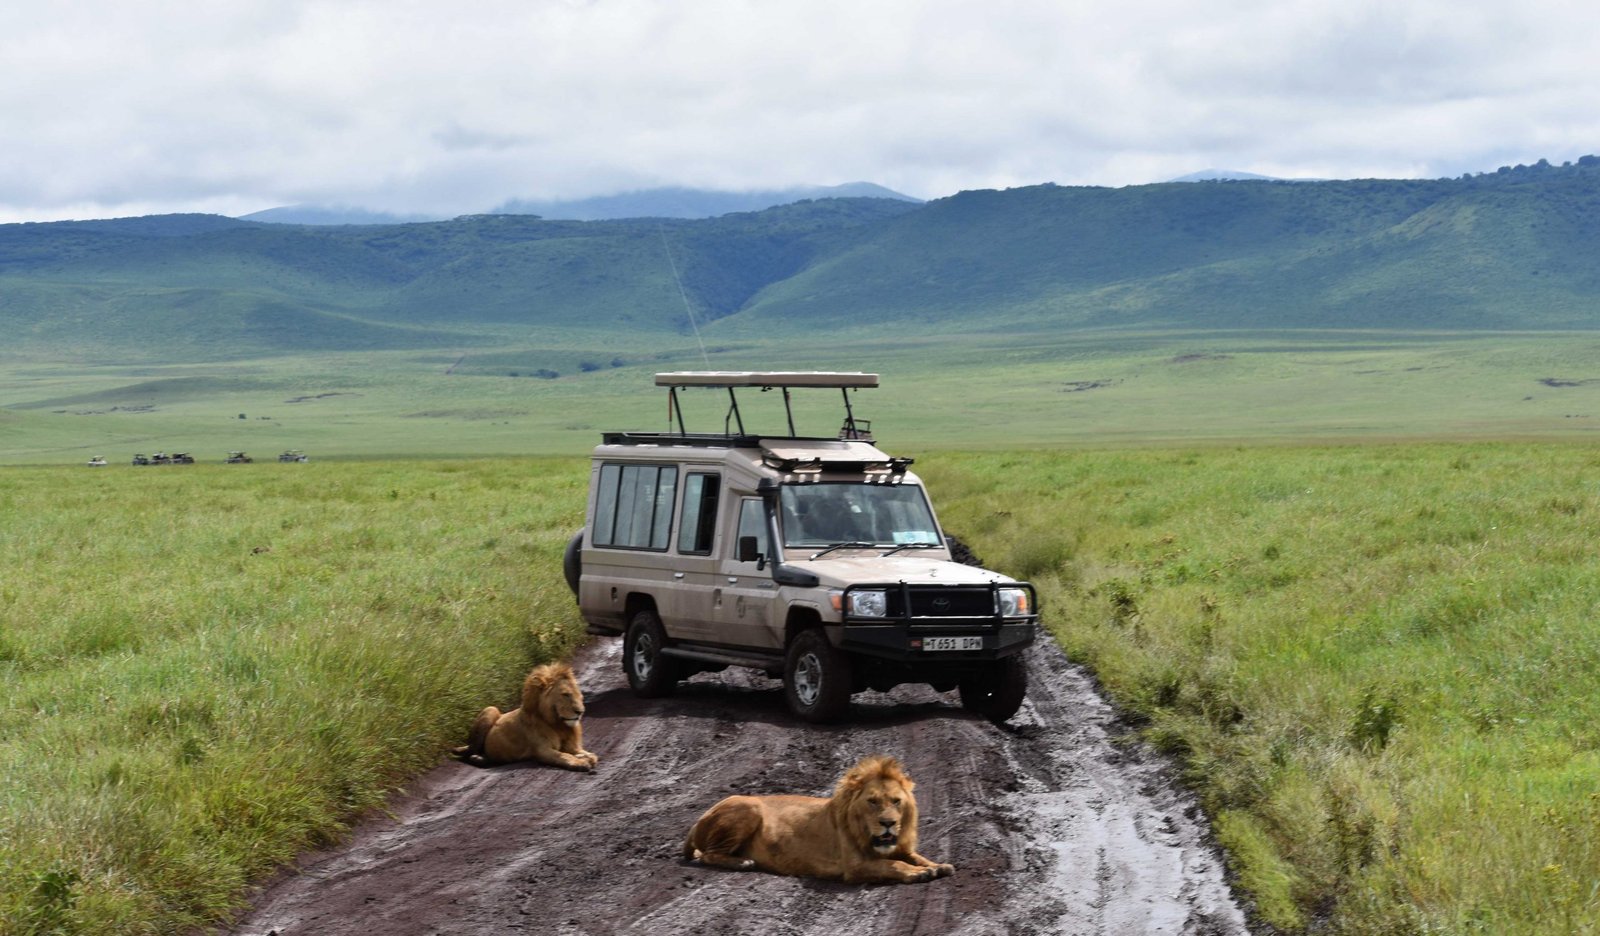 The Ngorongoro crater img